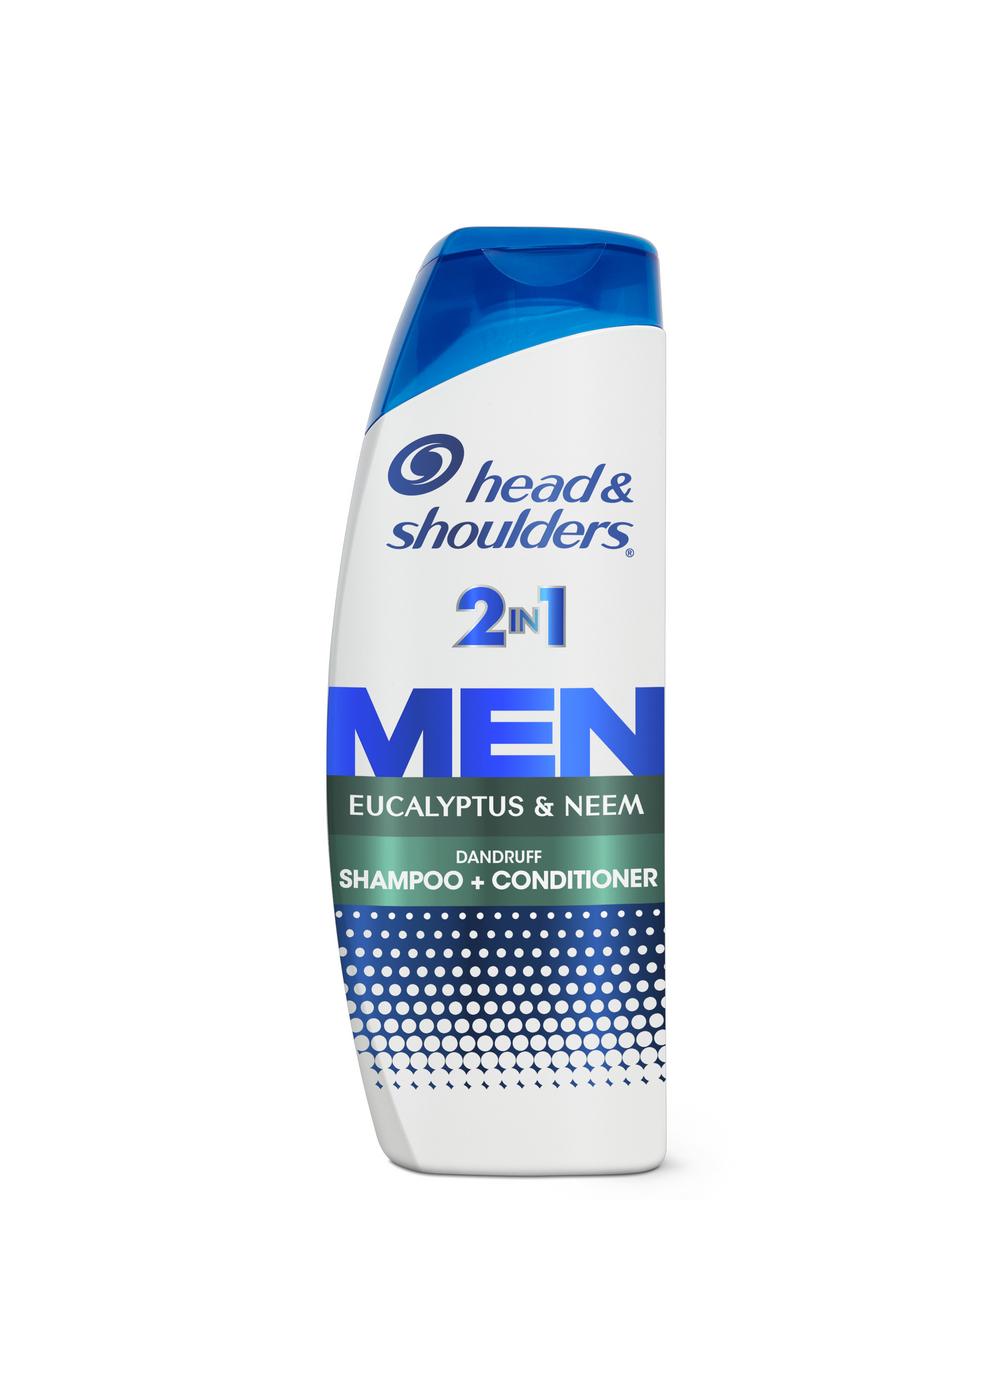 Head & Shoulders 2 in 1 Men Dandruff Shampoo + Conditioner - Eucalyptus & Neem; image 4 of 11